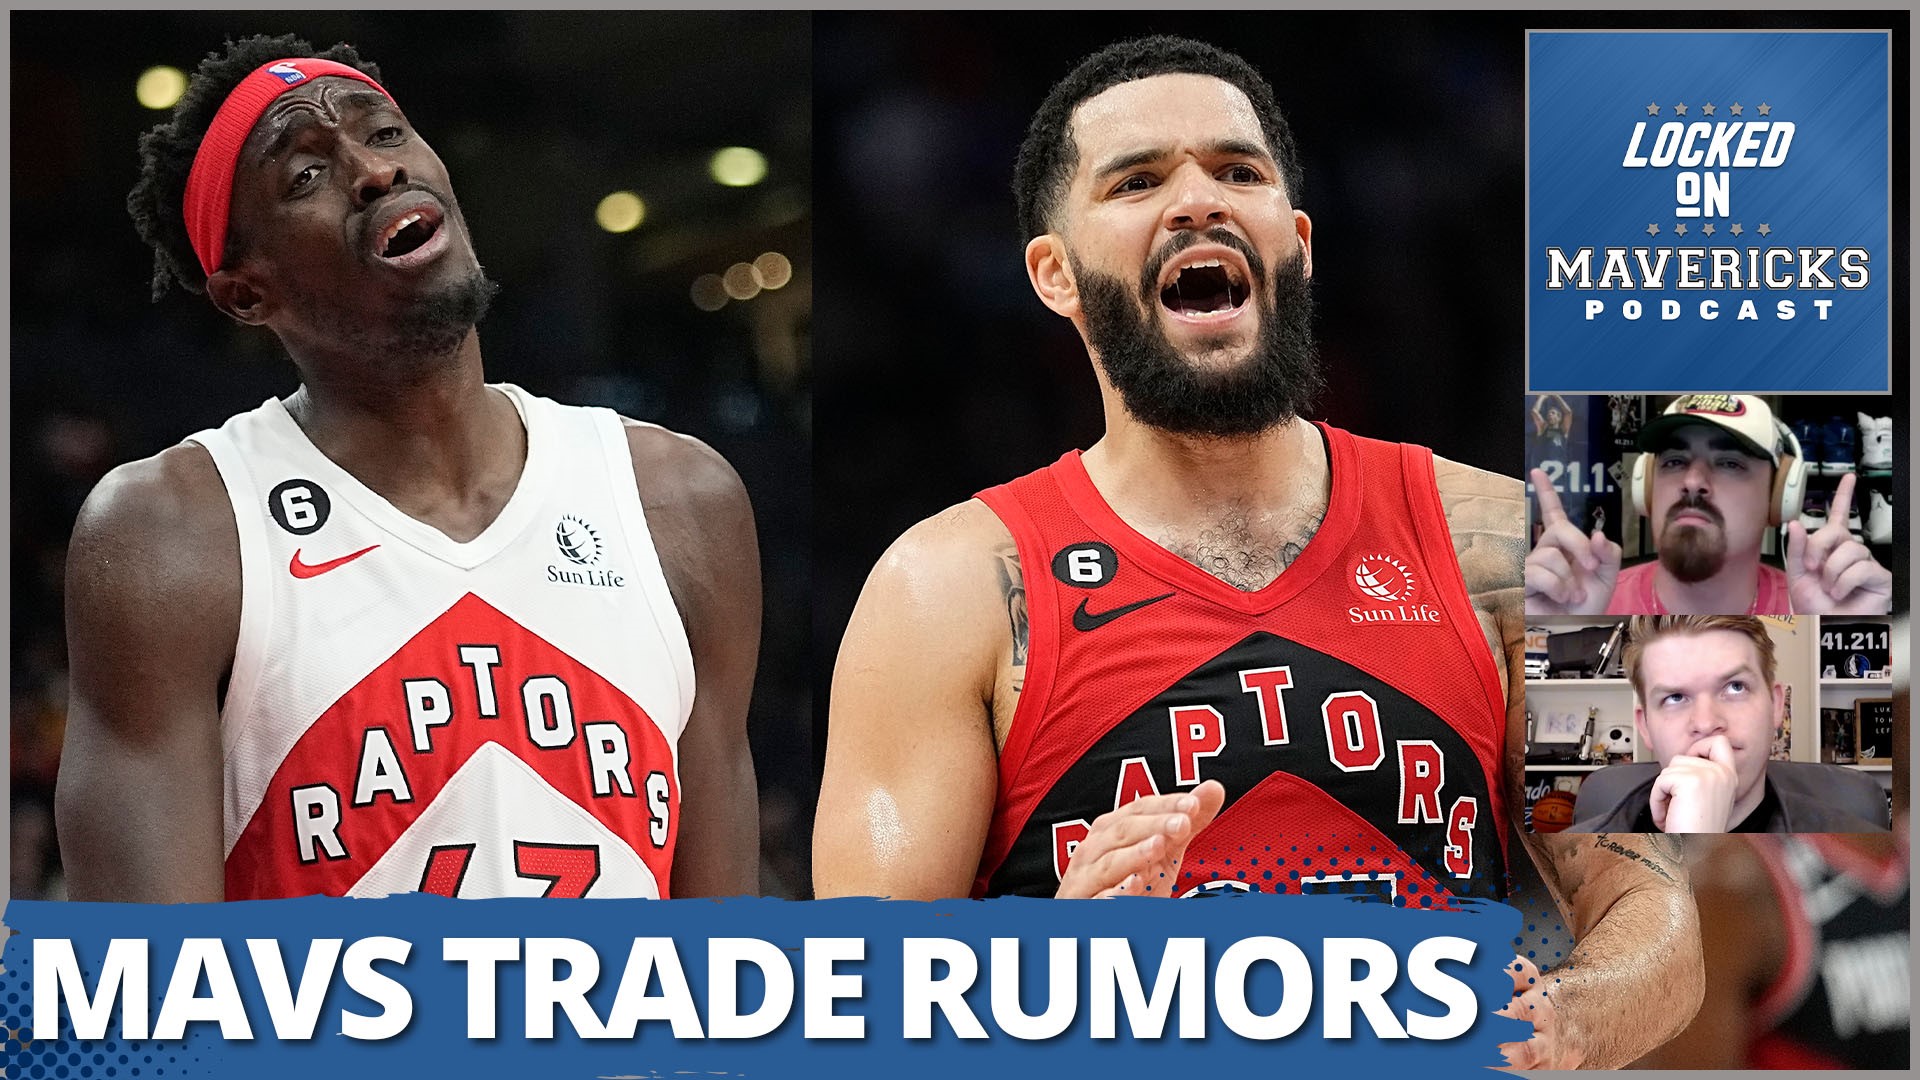 Nick Angstadt & Isaac Harris discuss the Mavs Trade Rumors around the Raptors players.